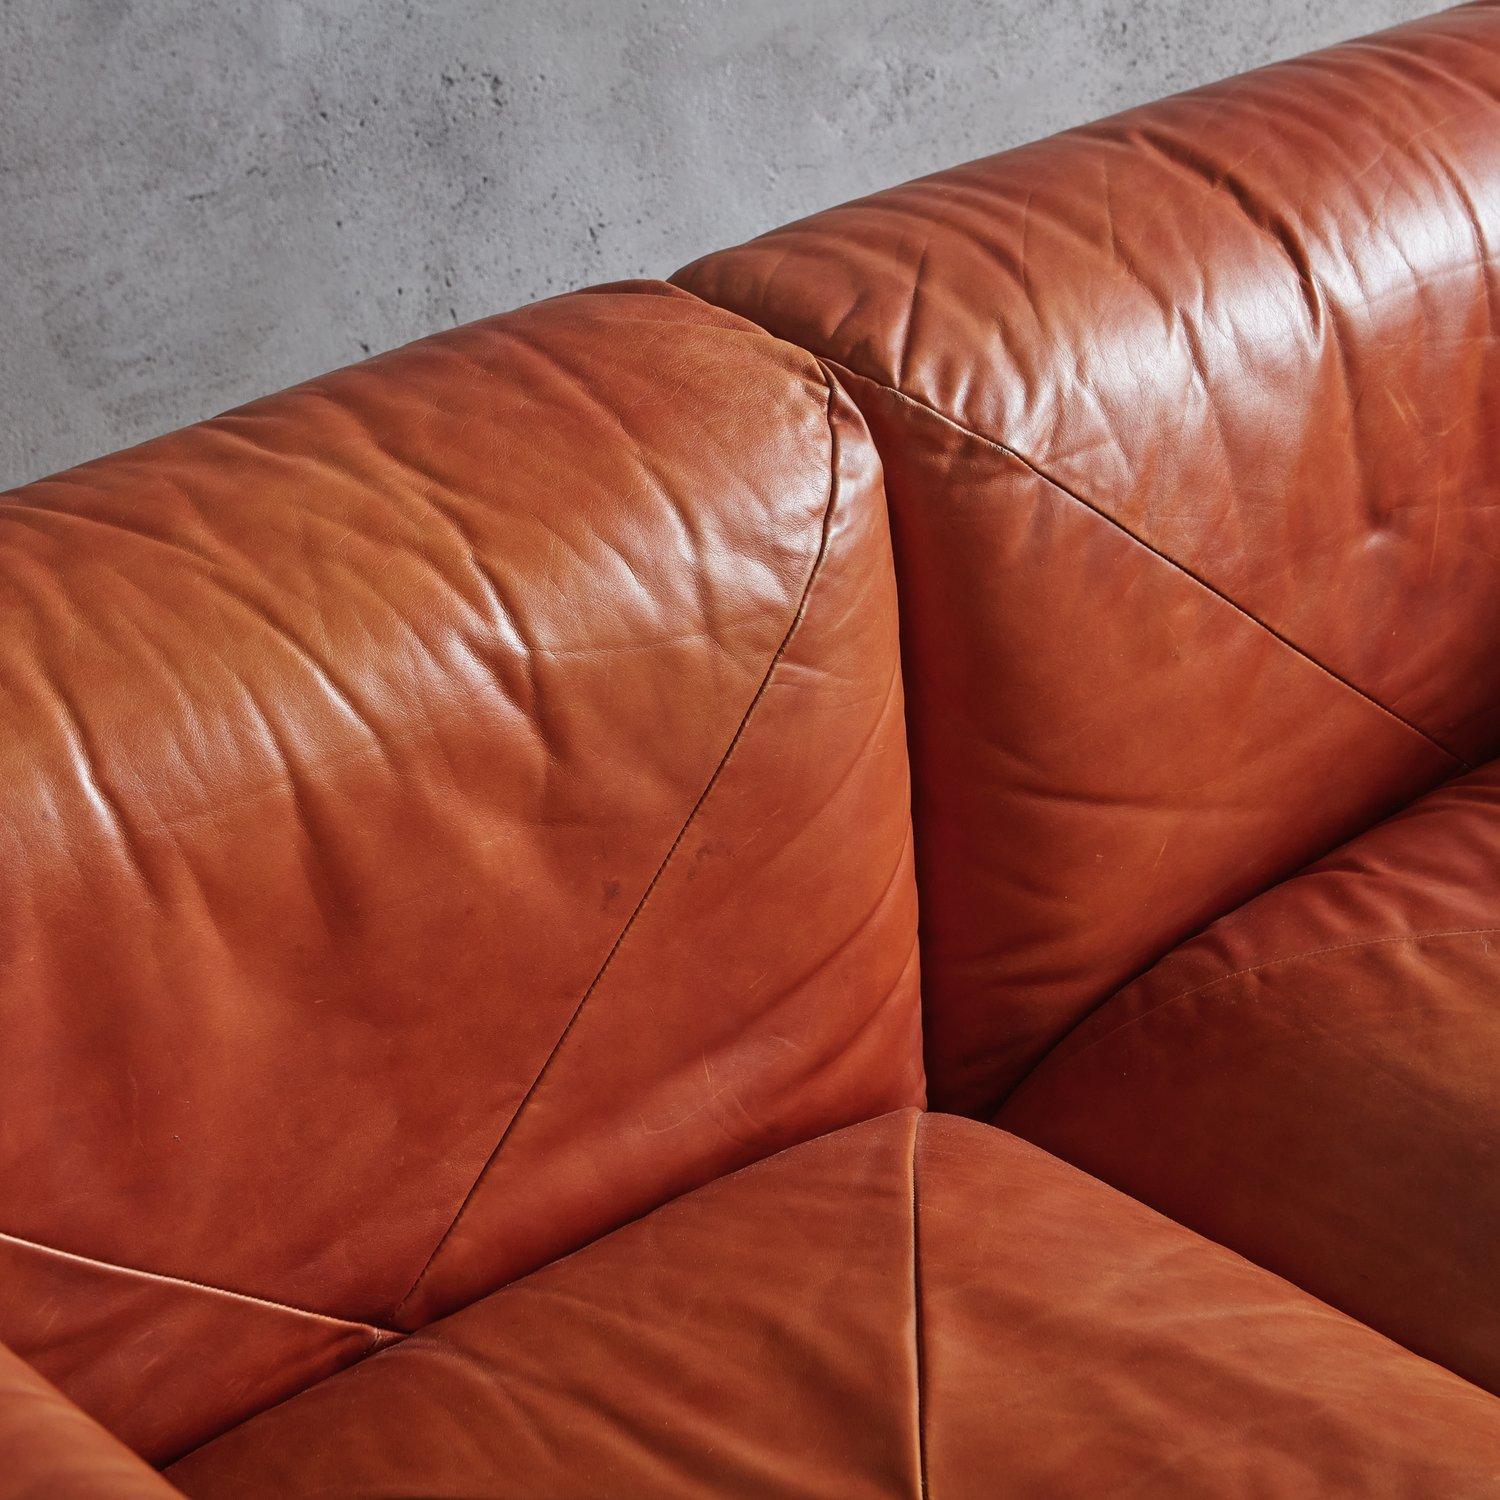 Marenco Sofa in Original Cognac Leather by Mario Marenco for Arflex, Italy 1970s For Sale 1